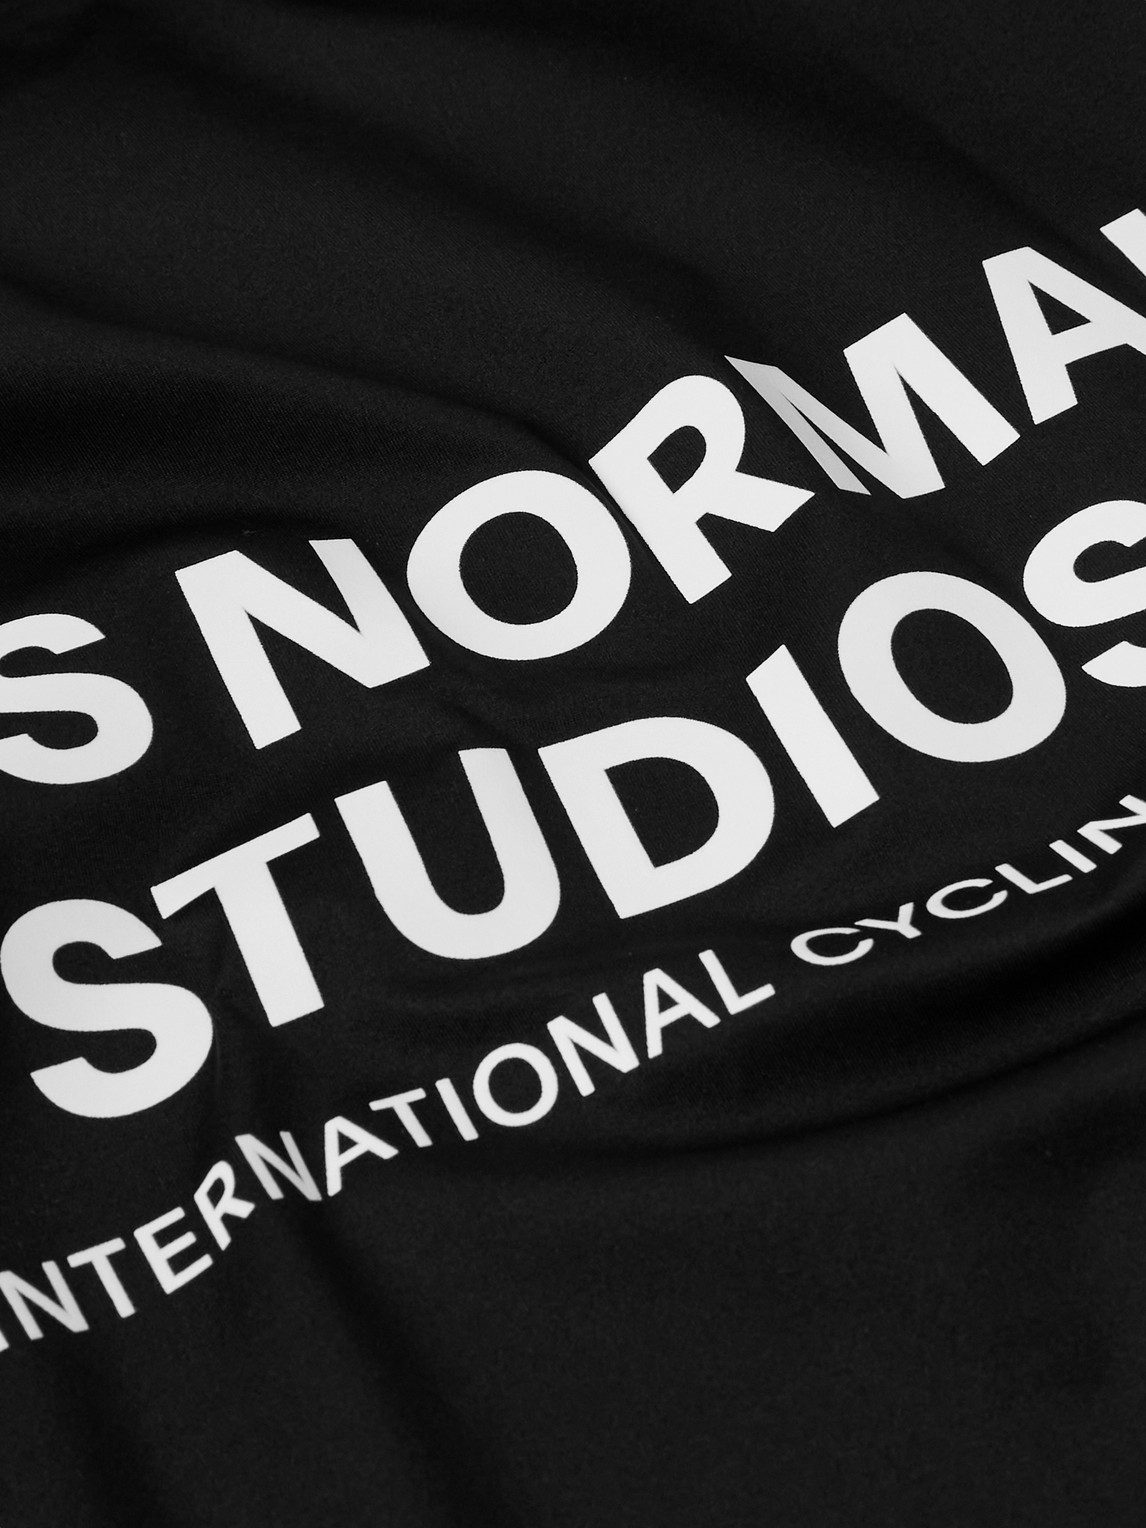 Shop Pas Normal Studios Mechanism Pro Rain Logo-print Cycling Jersey In Black